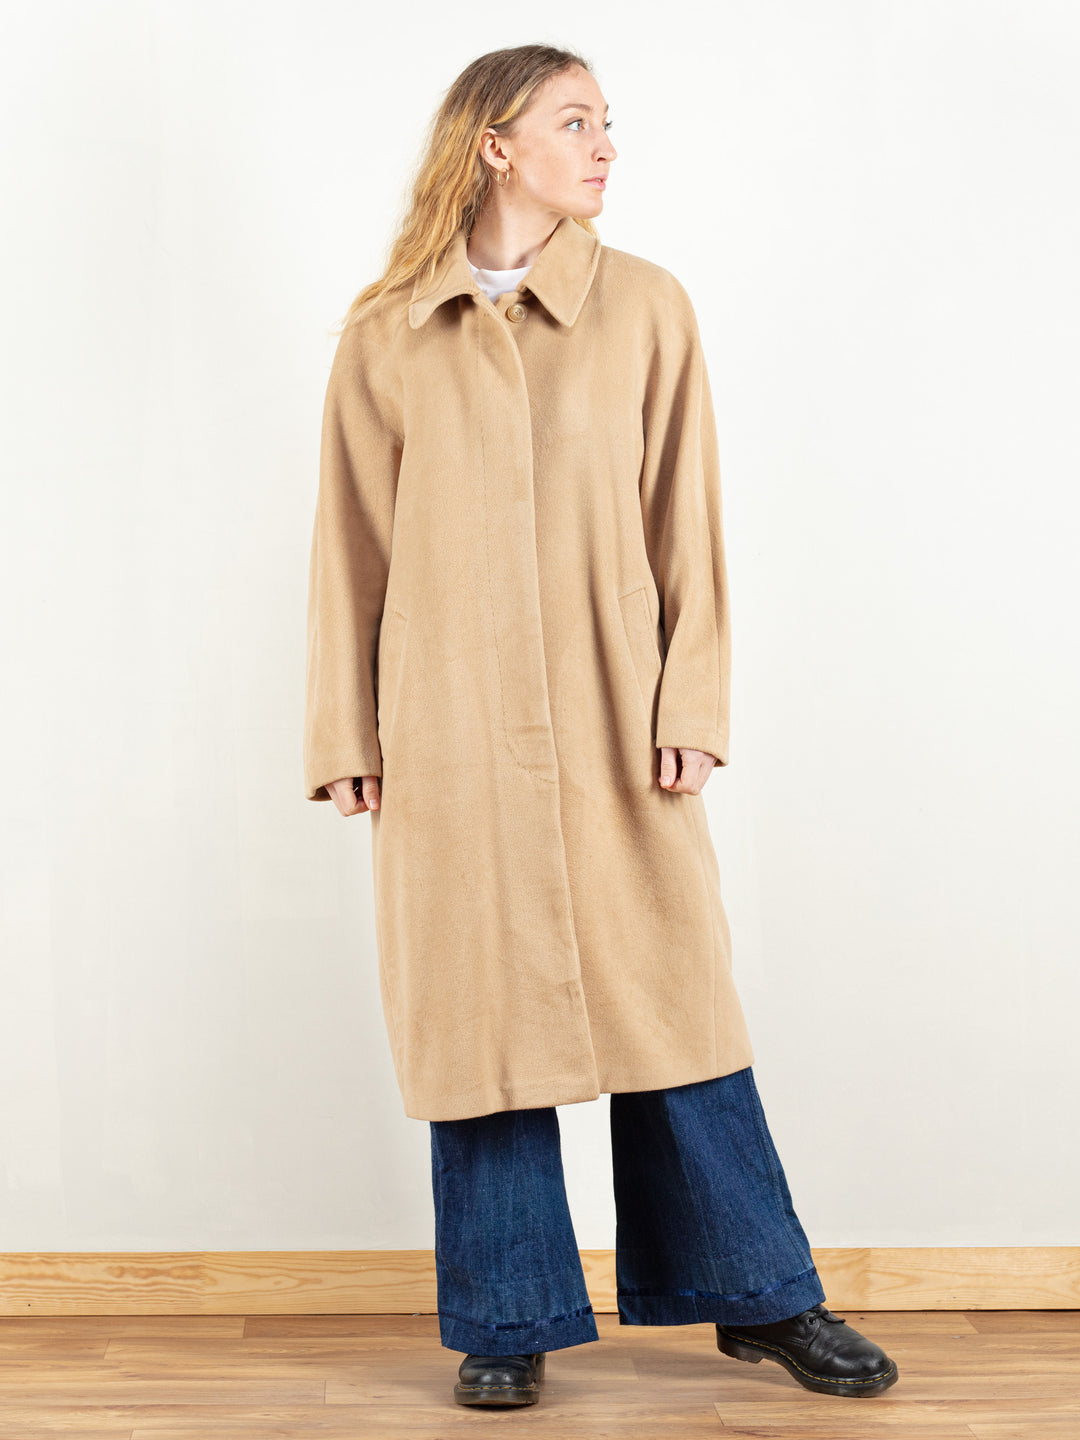 Beige Wool Coat women vintage 80s winter coat minimalistic vintage 80s coat mod outerwear women vintage clothing size large